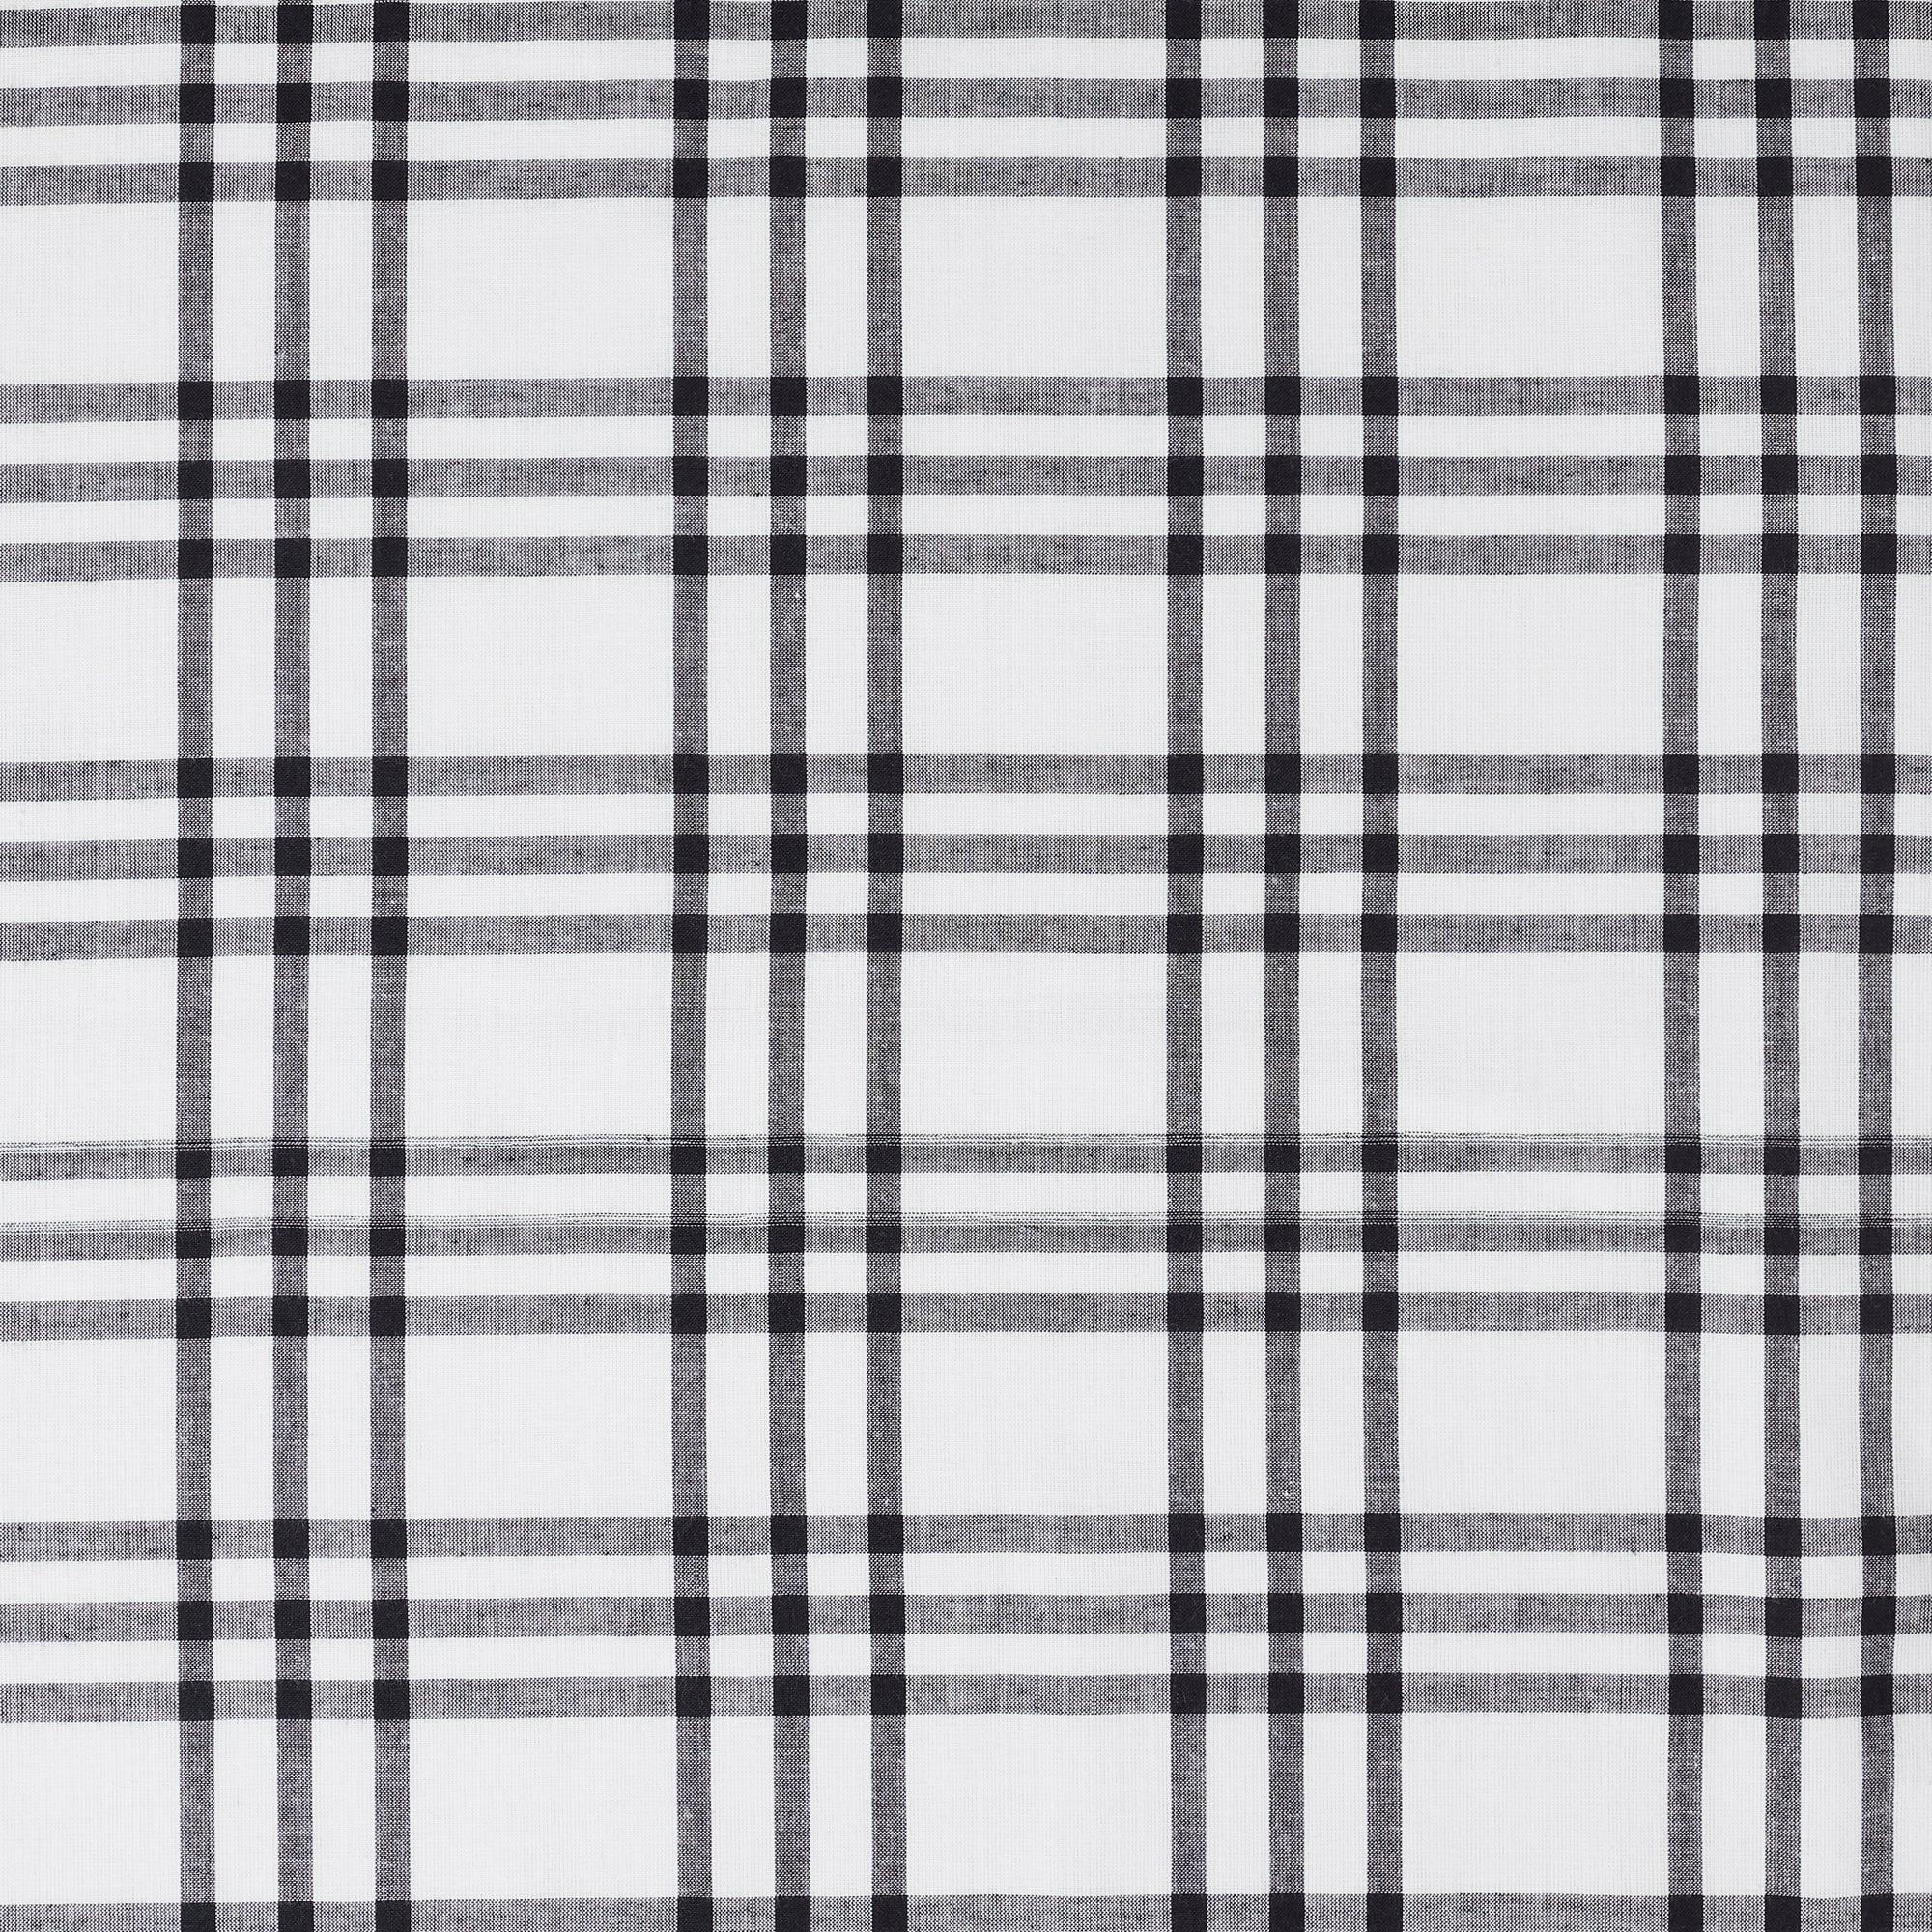 Sawyer Mill Black Plaid Tier Curtain Set of 2 L36xW36 VHC Brands